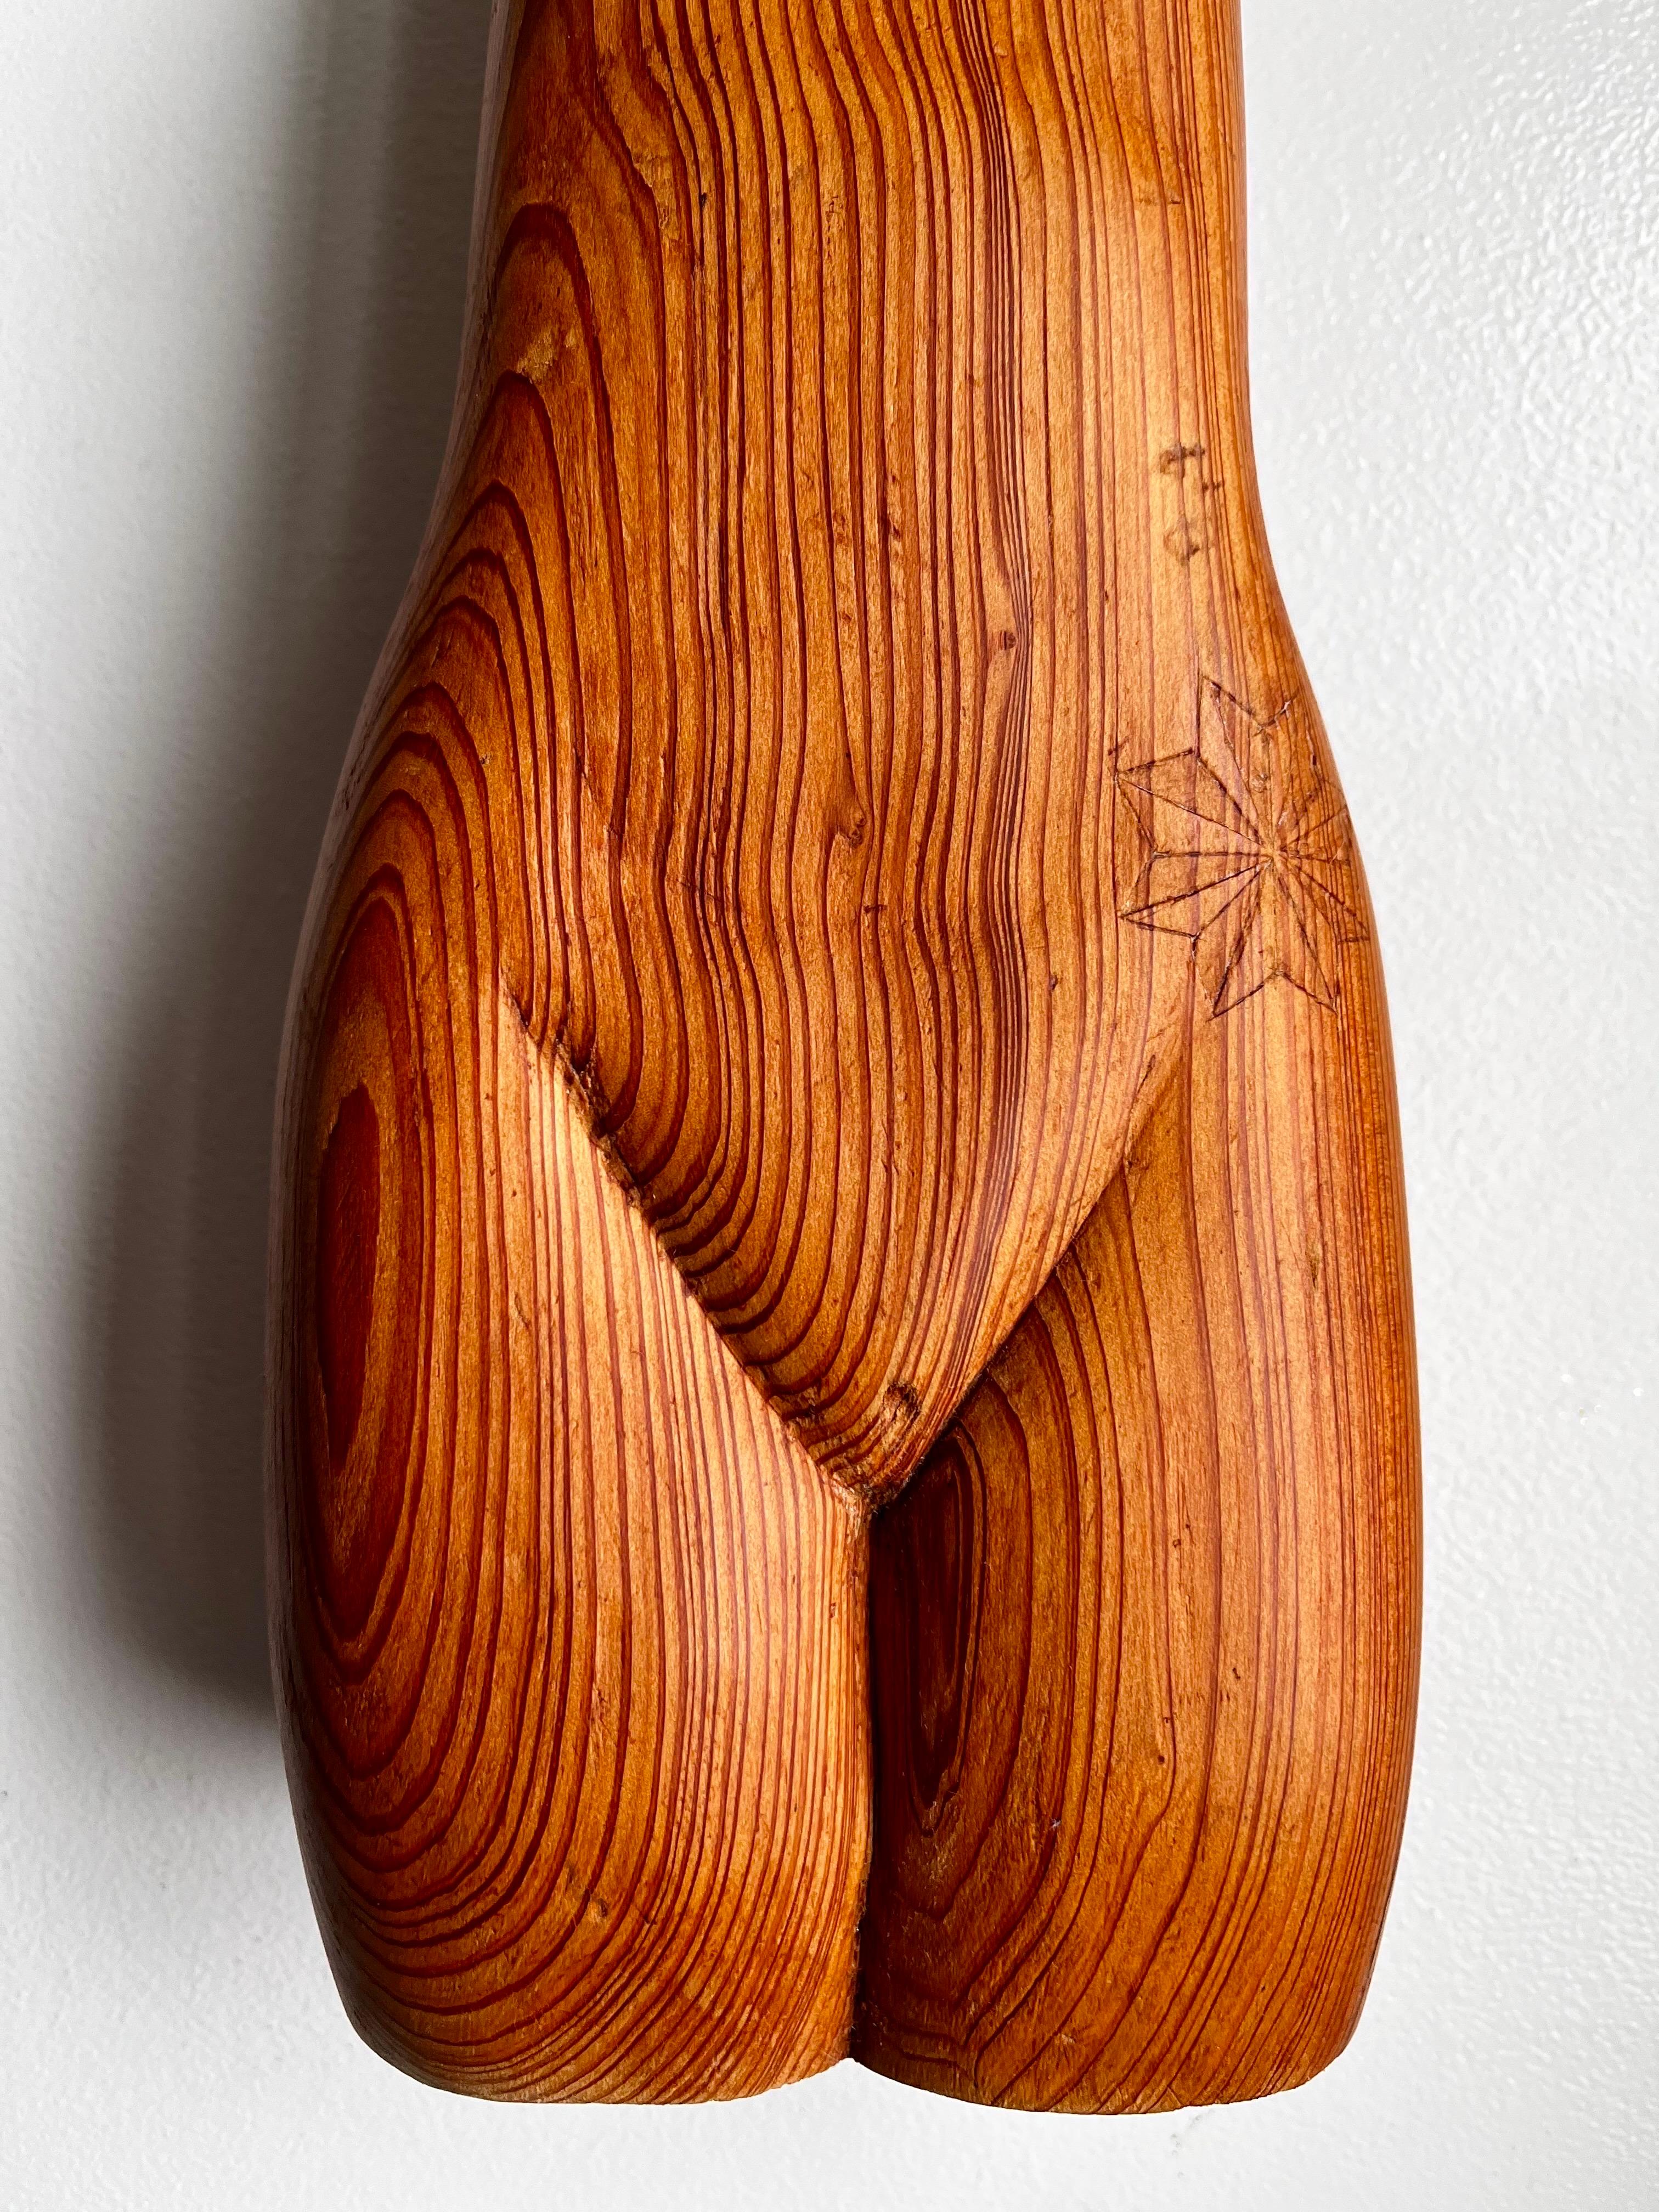 Softwood Primitive Modernist Wood Sculpture of Female Nude For Sale